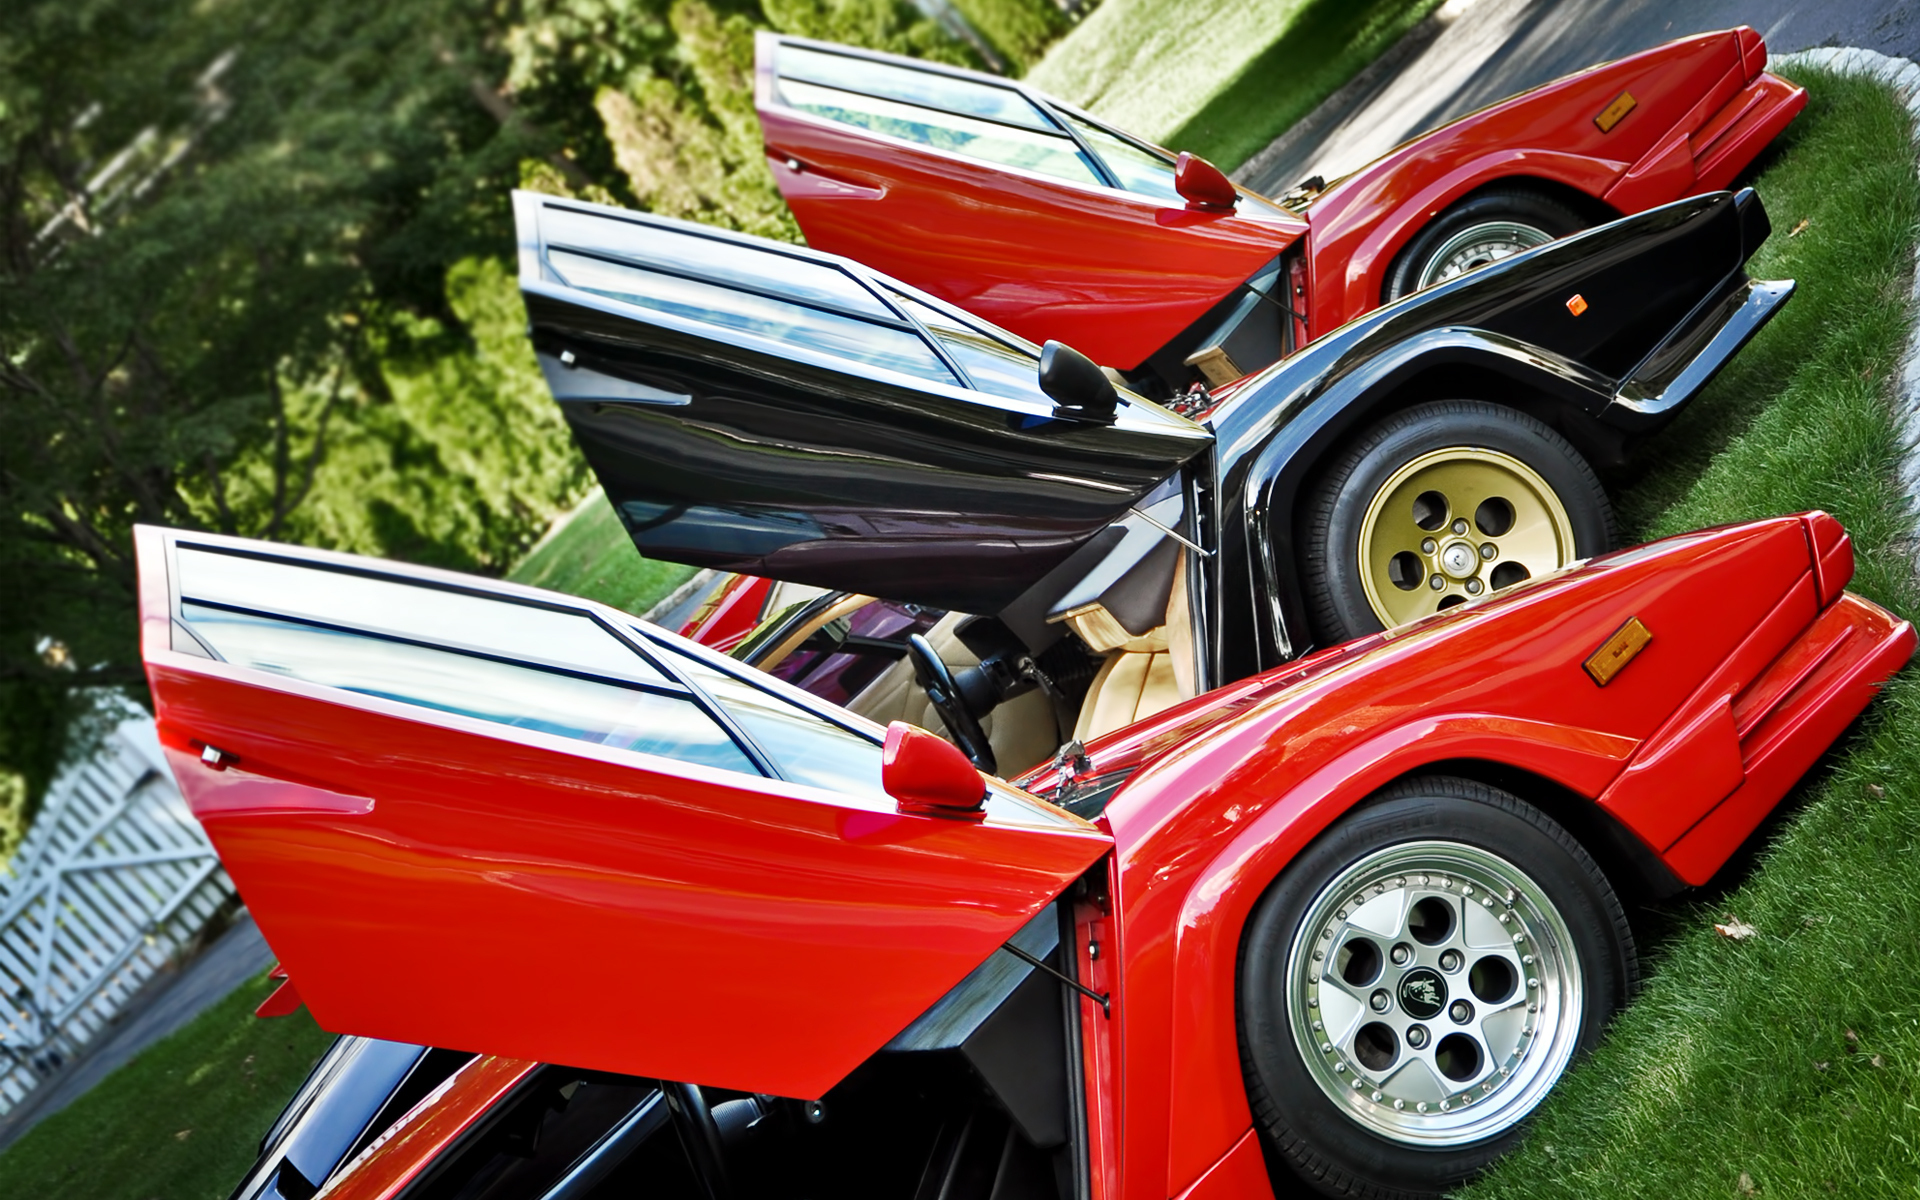 Vehicles Lamborghini Countach HD Wallpaper | Background Image